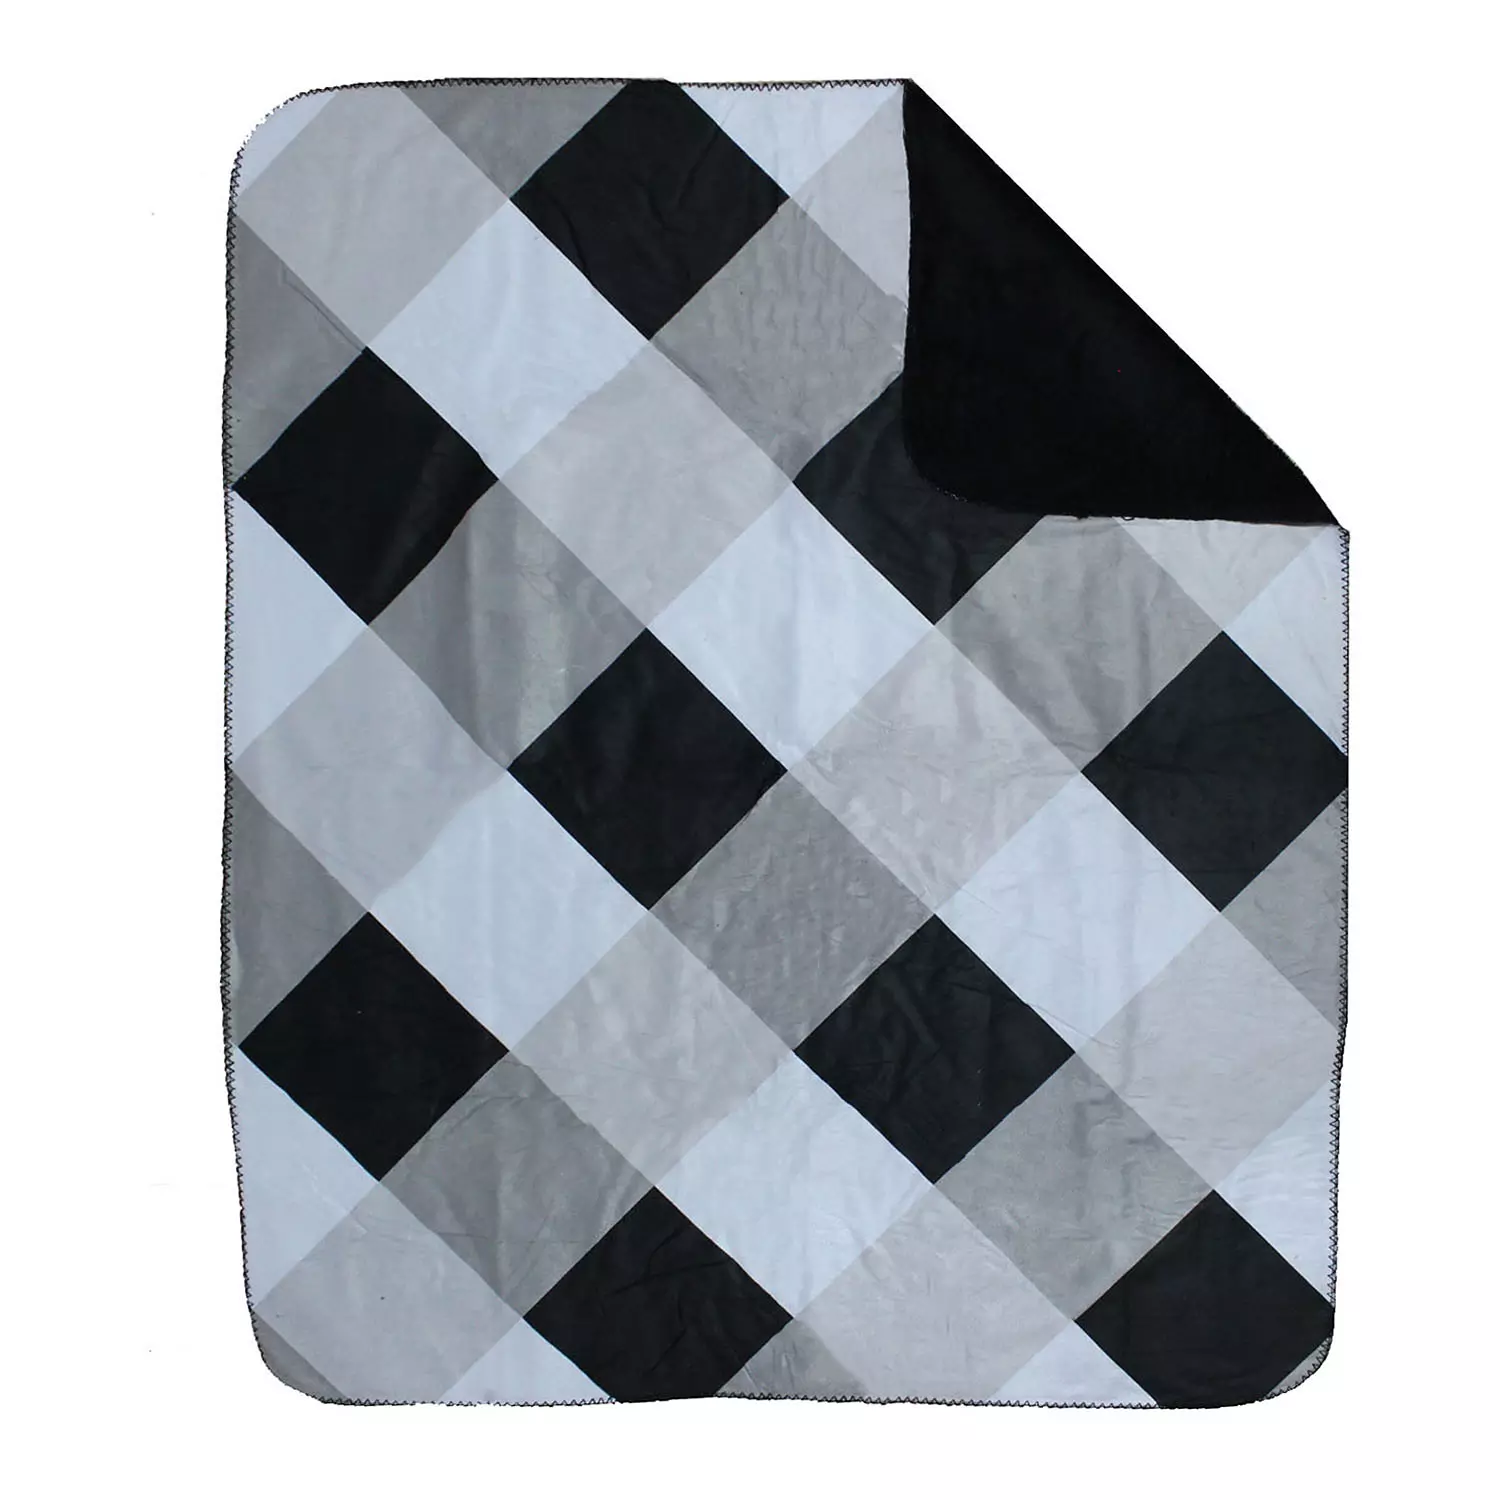 Printed checkered throw, 50"x60", black